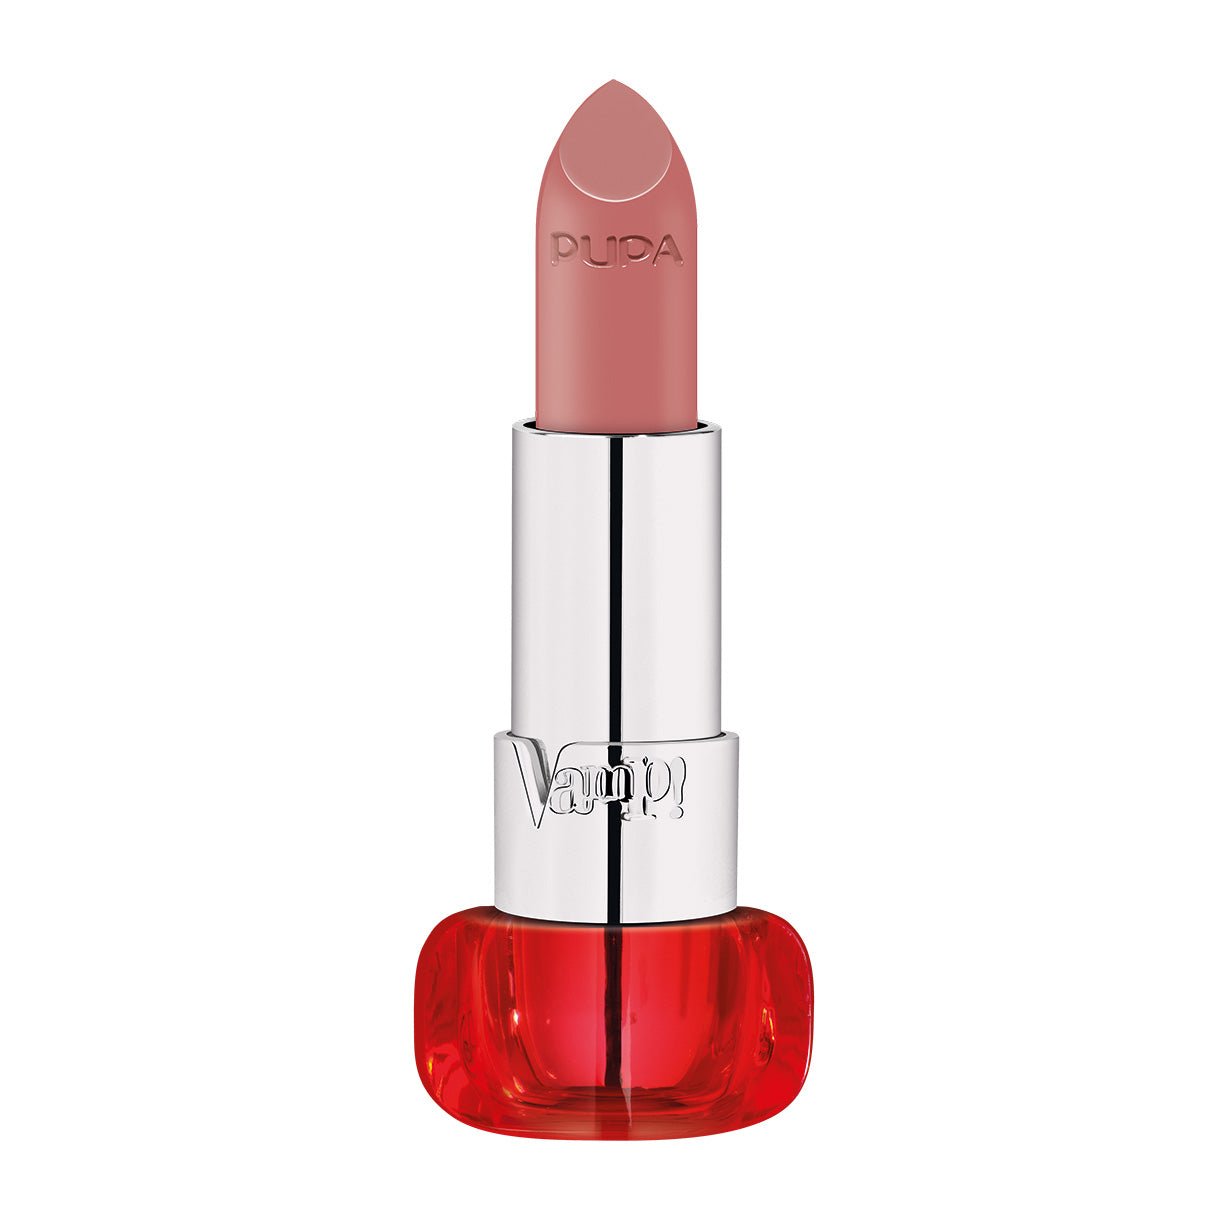 Pupa vamp Extreme Colour lipstick - Bloom Pharmacy